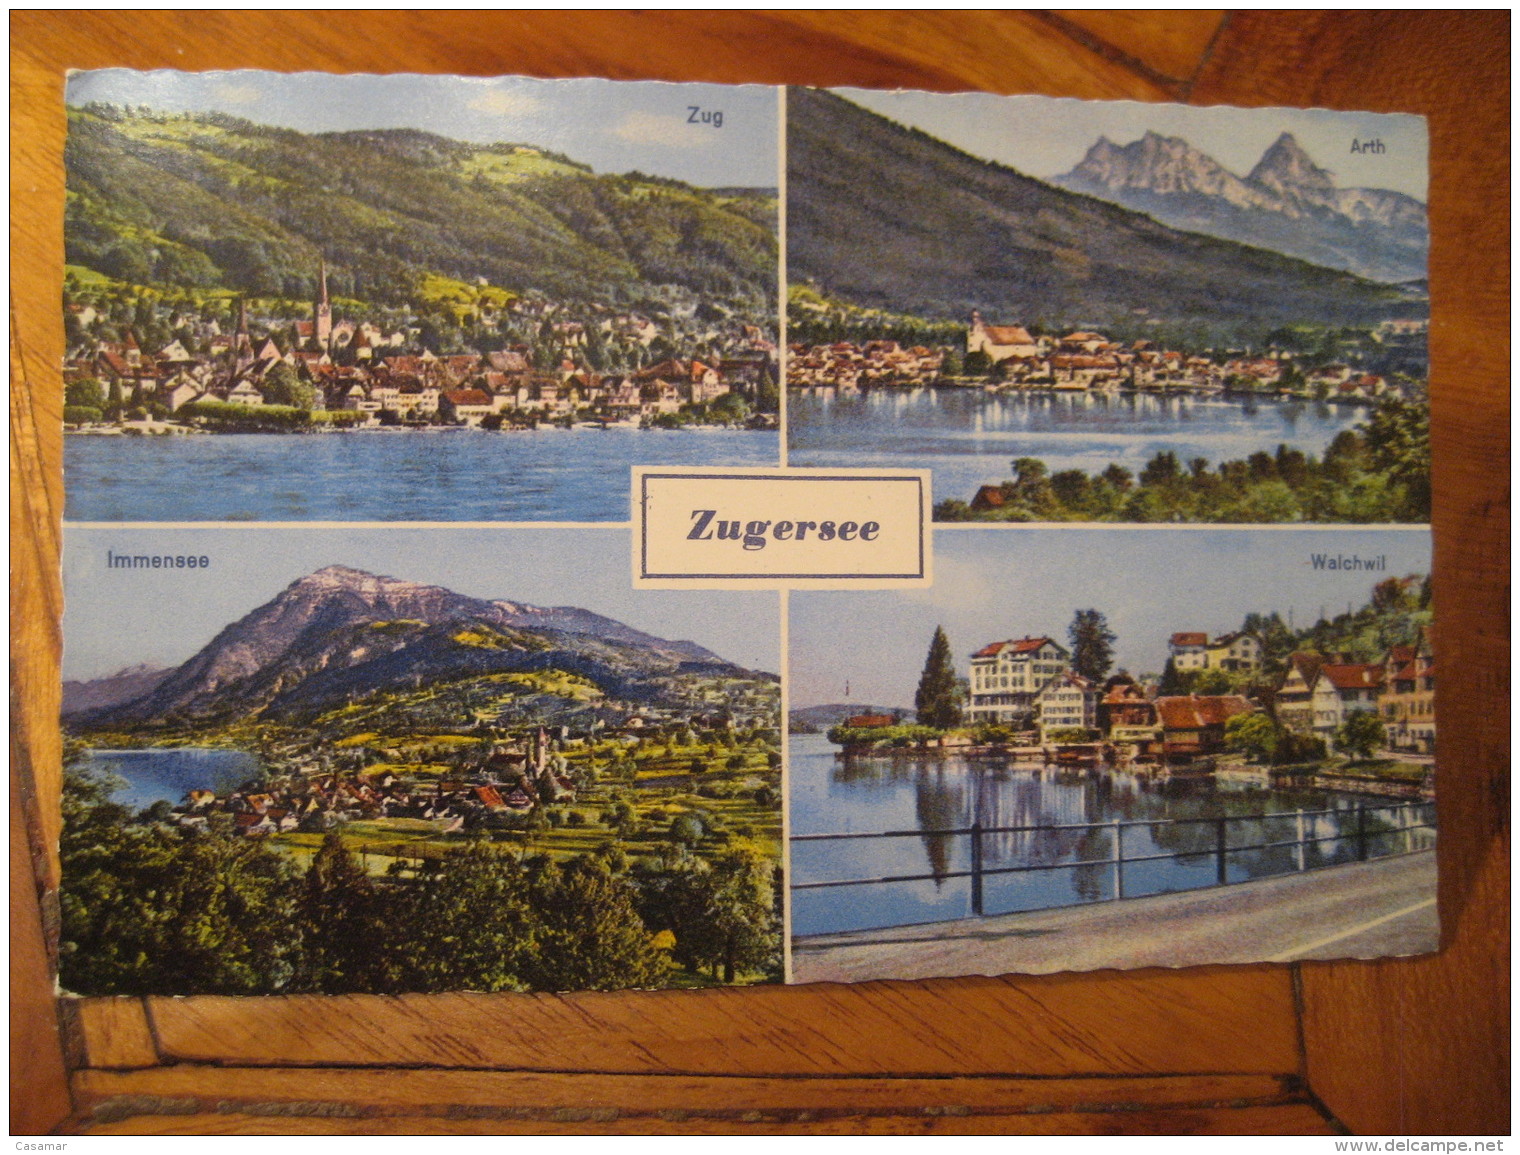 ZUGERSEE Zuger See Lake Arth Alchwill Immensee Post Card ZUG Switzerland - Zug